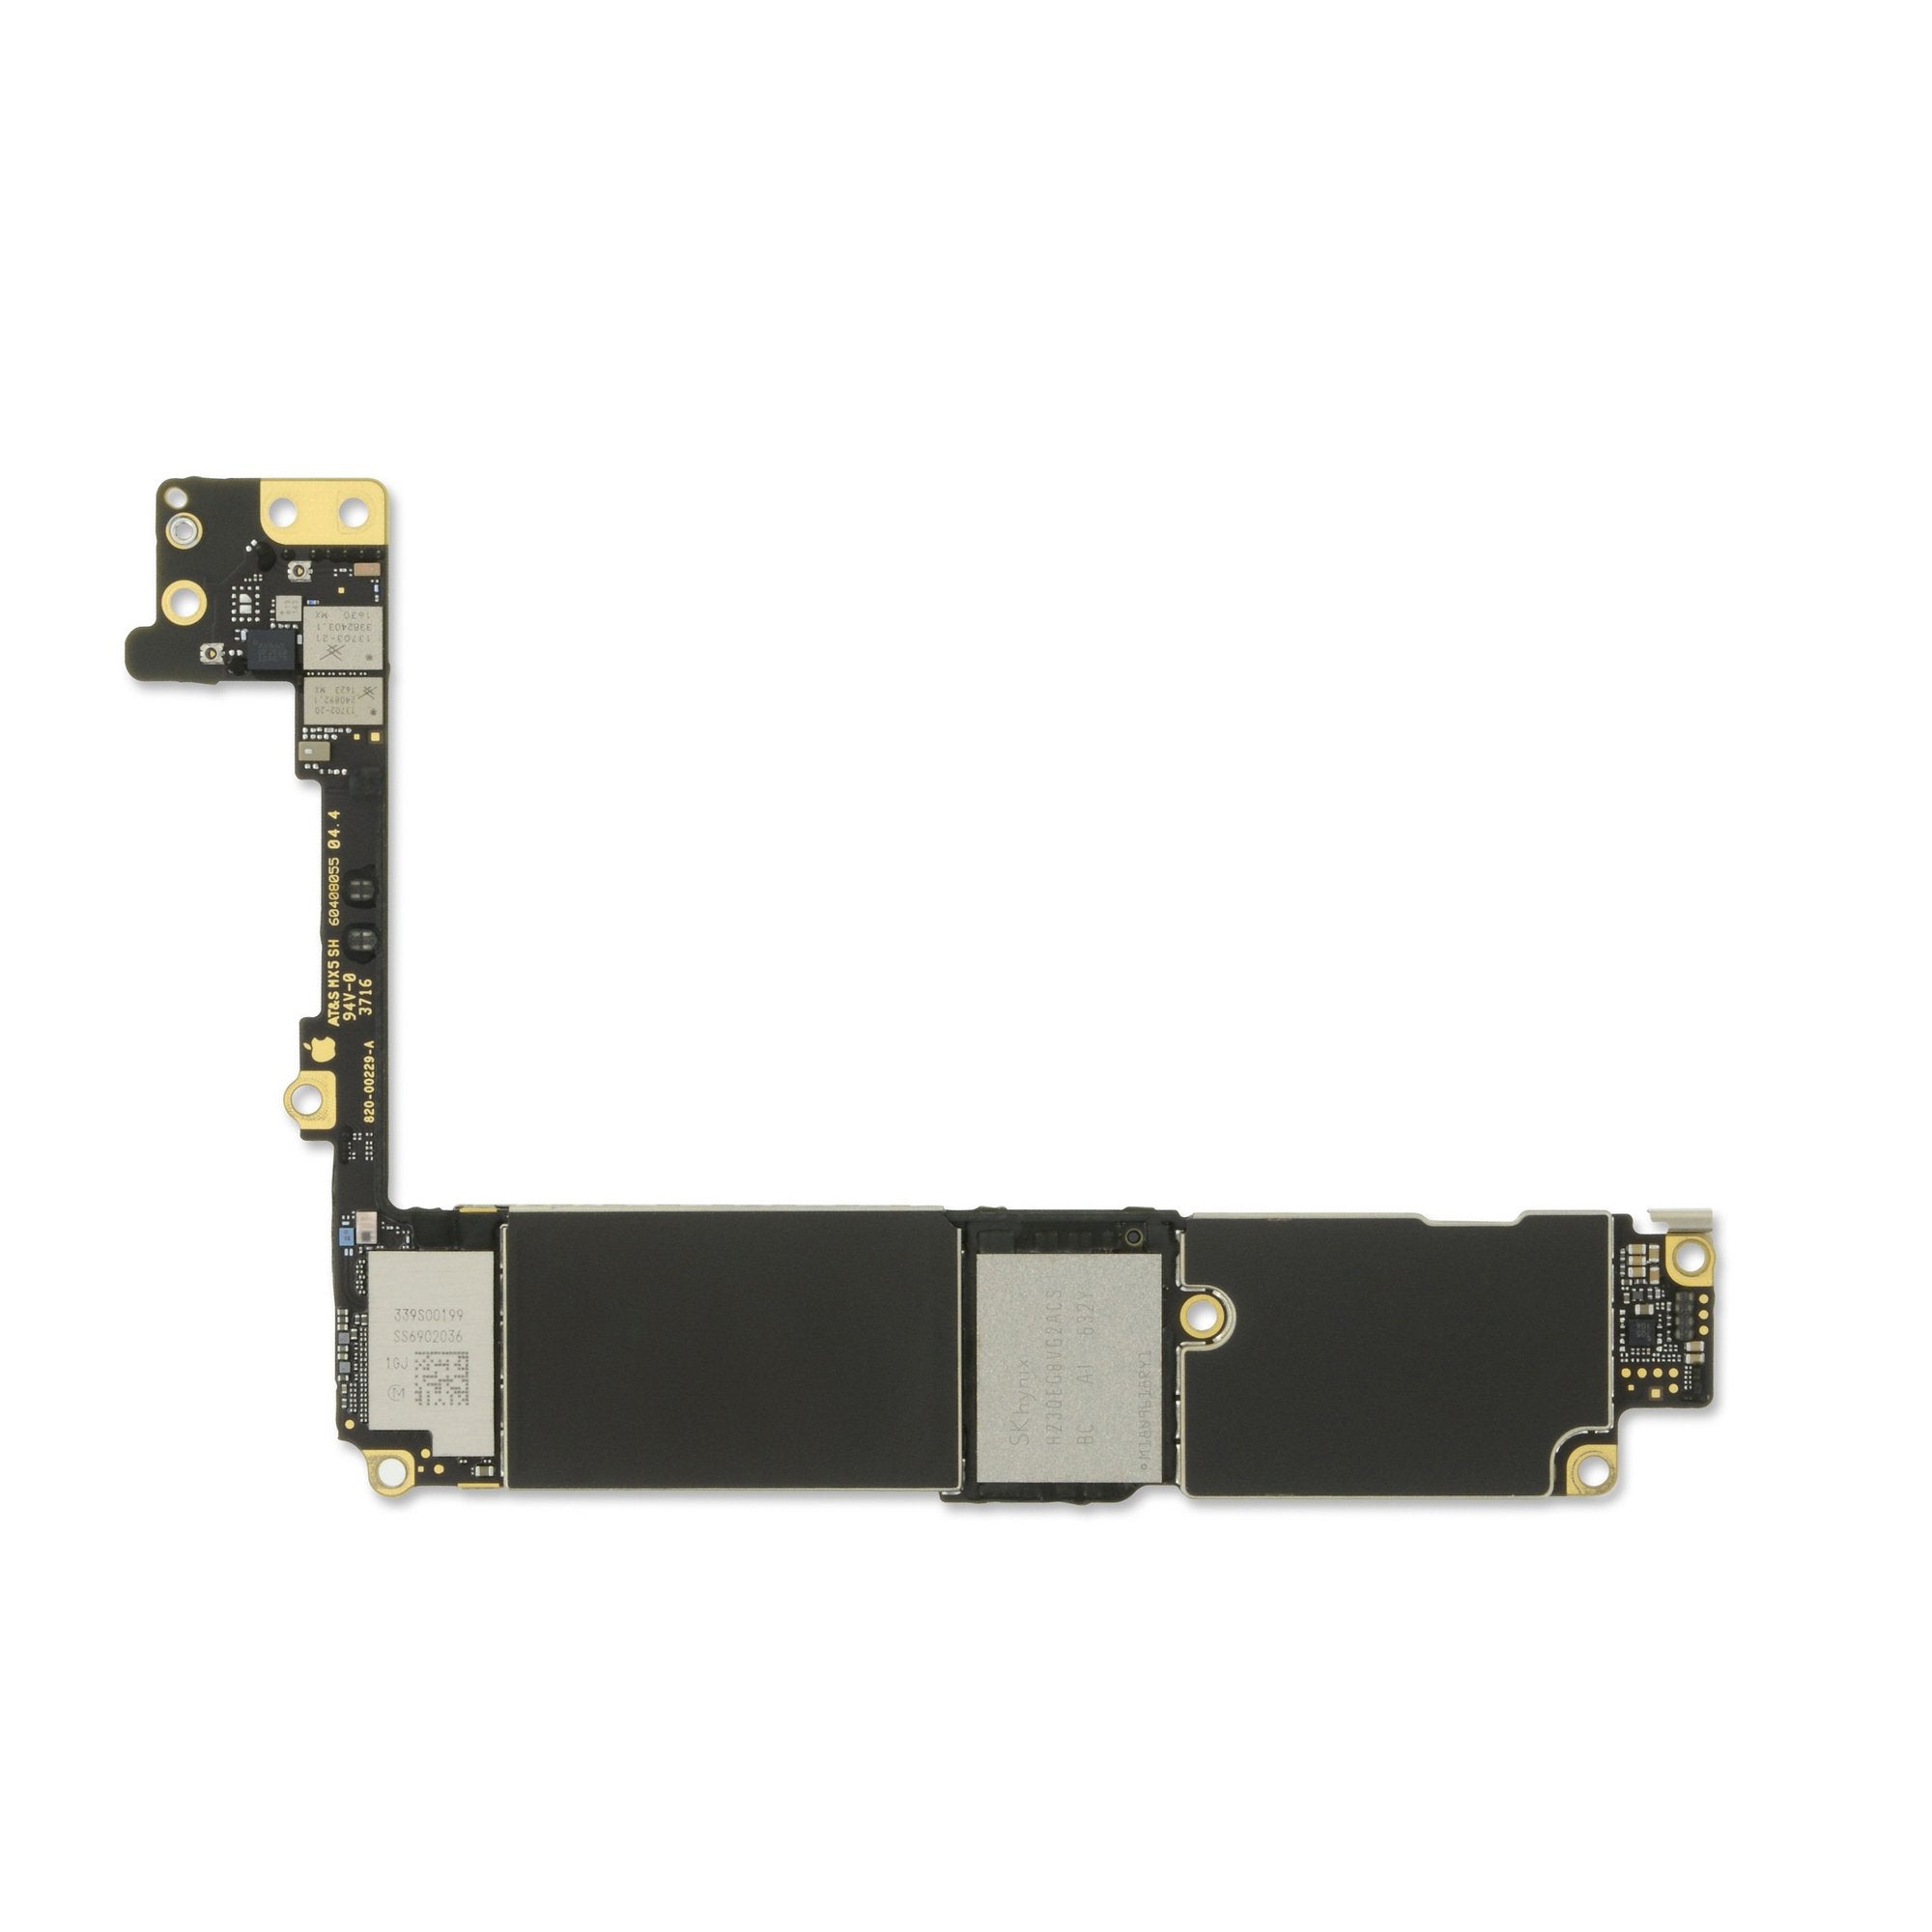 iPhone 7 Plus A1661 (Sprint) Logic Board 32 GB Used